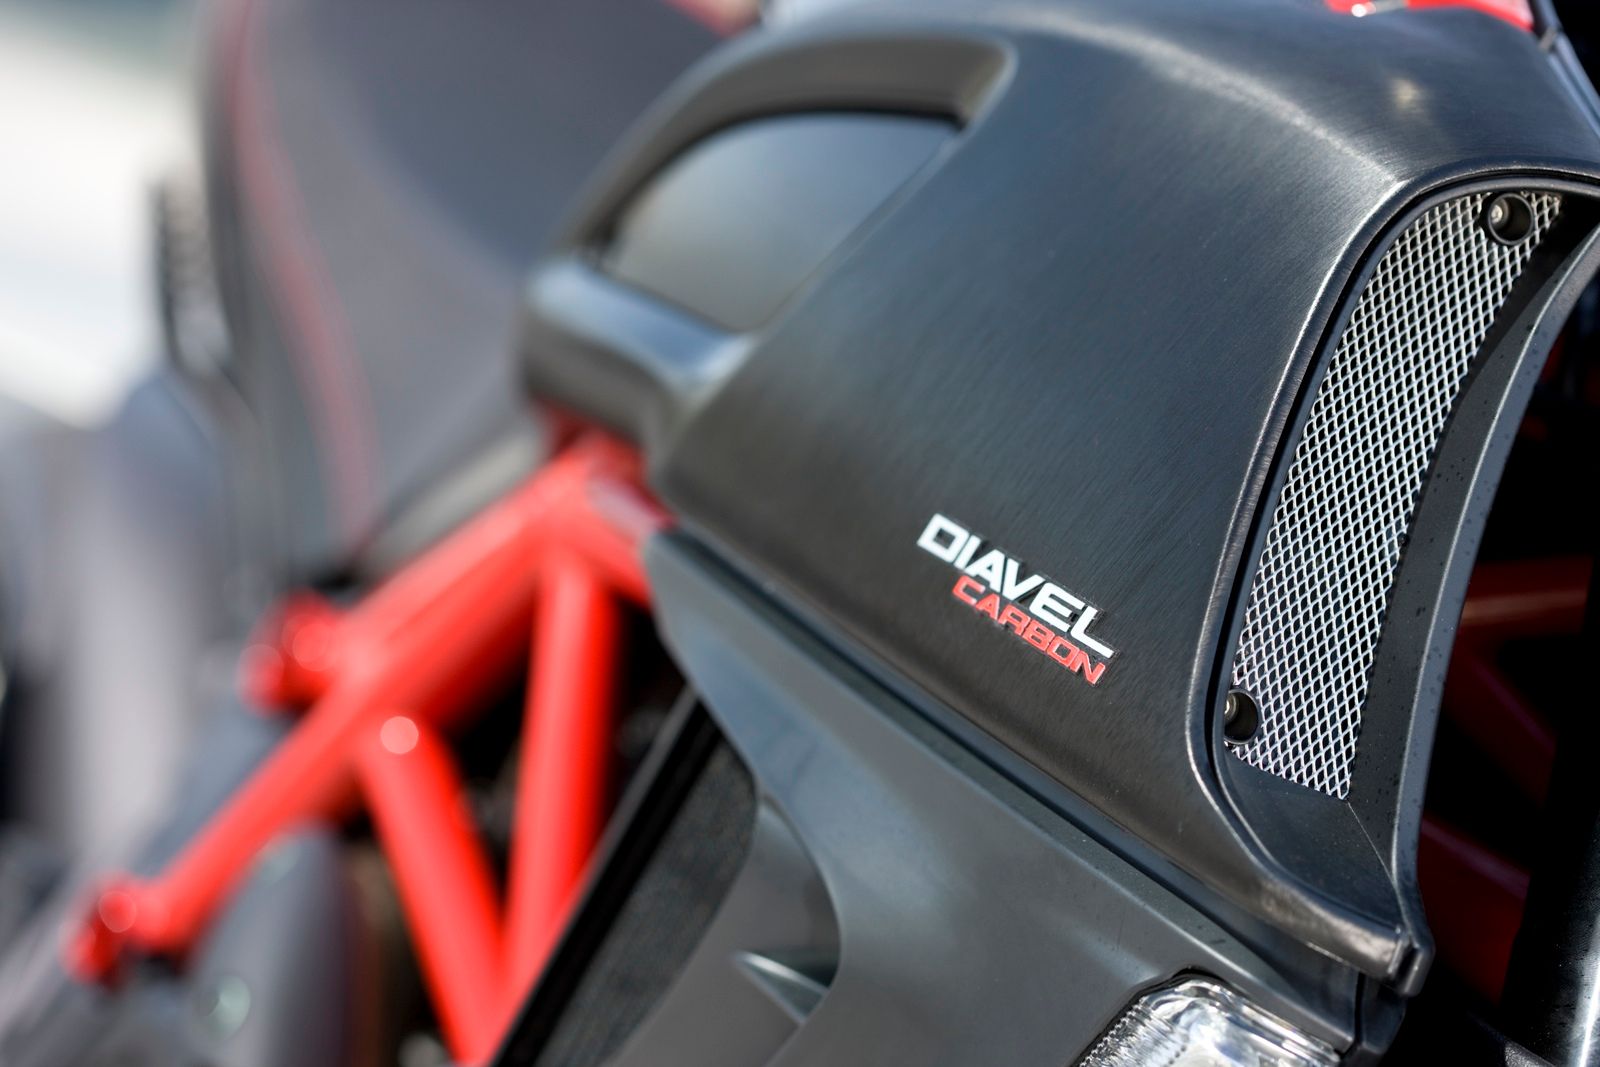 2012 Ducati Diavel Carbon